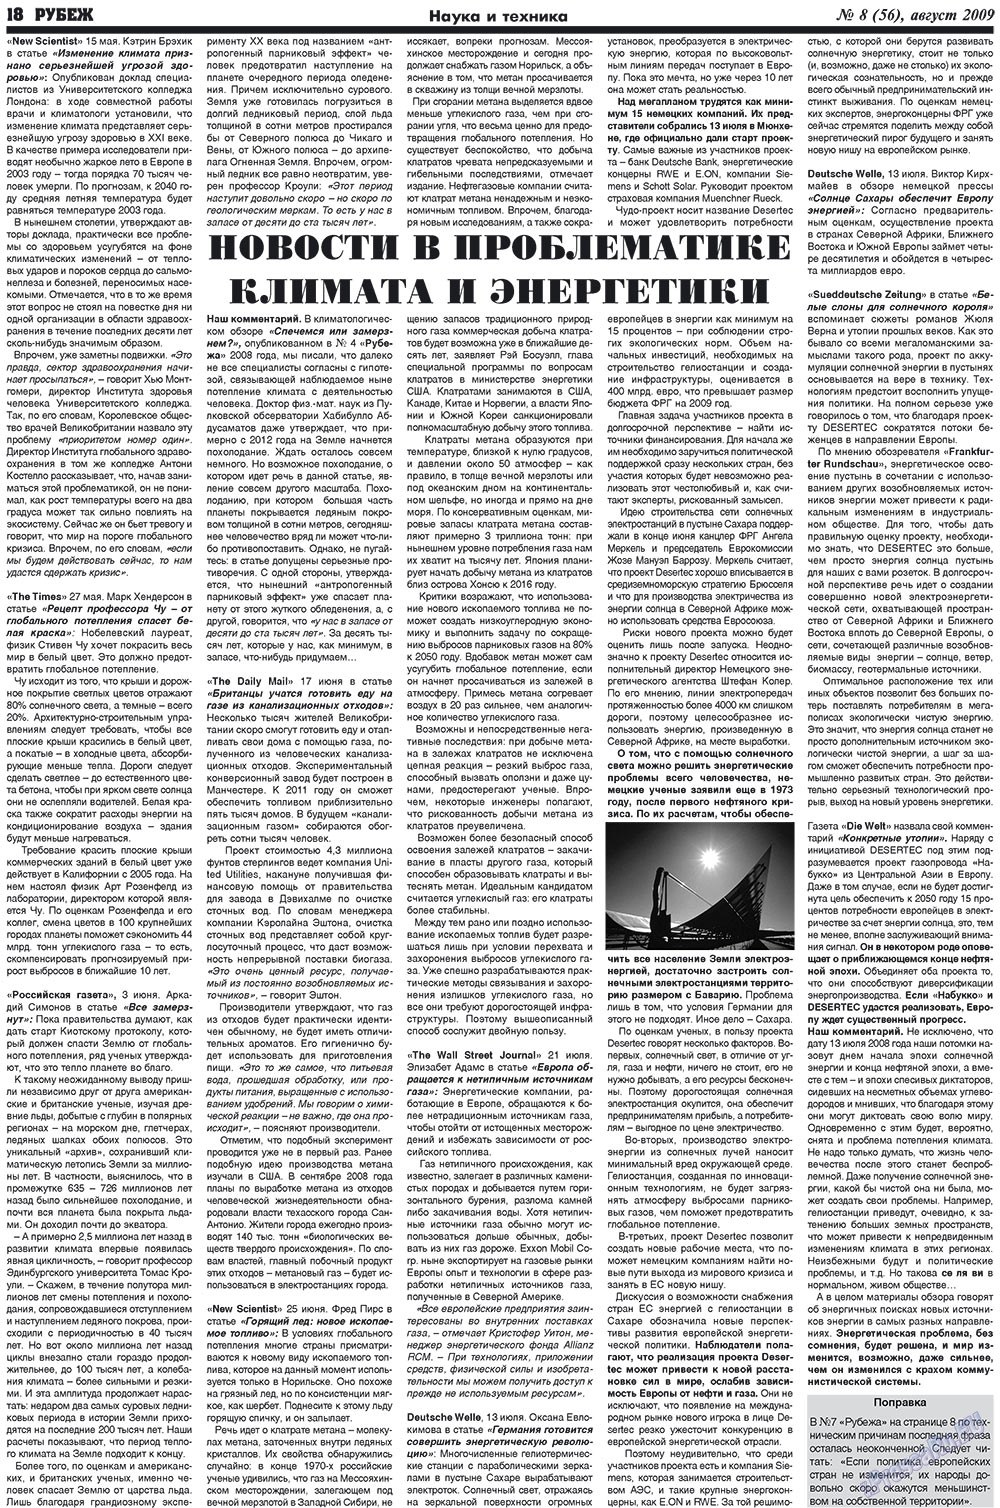 Рубеж, газета. 2009 №8 стр.18